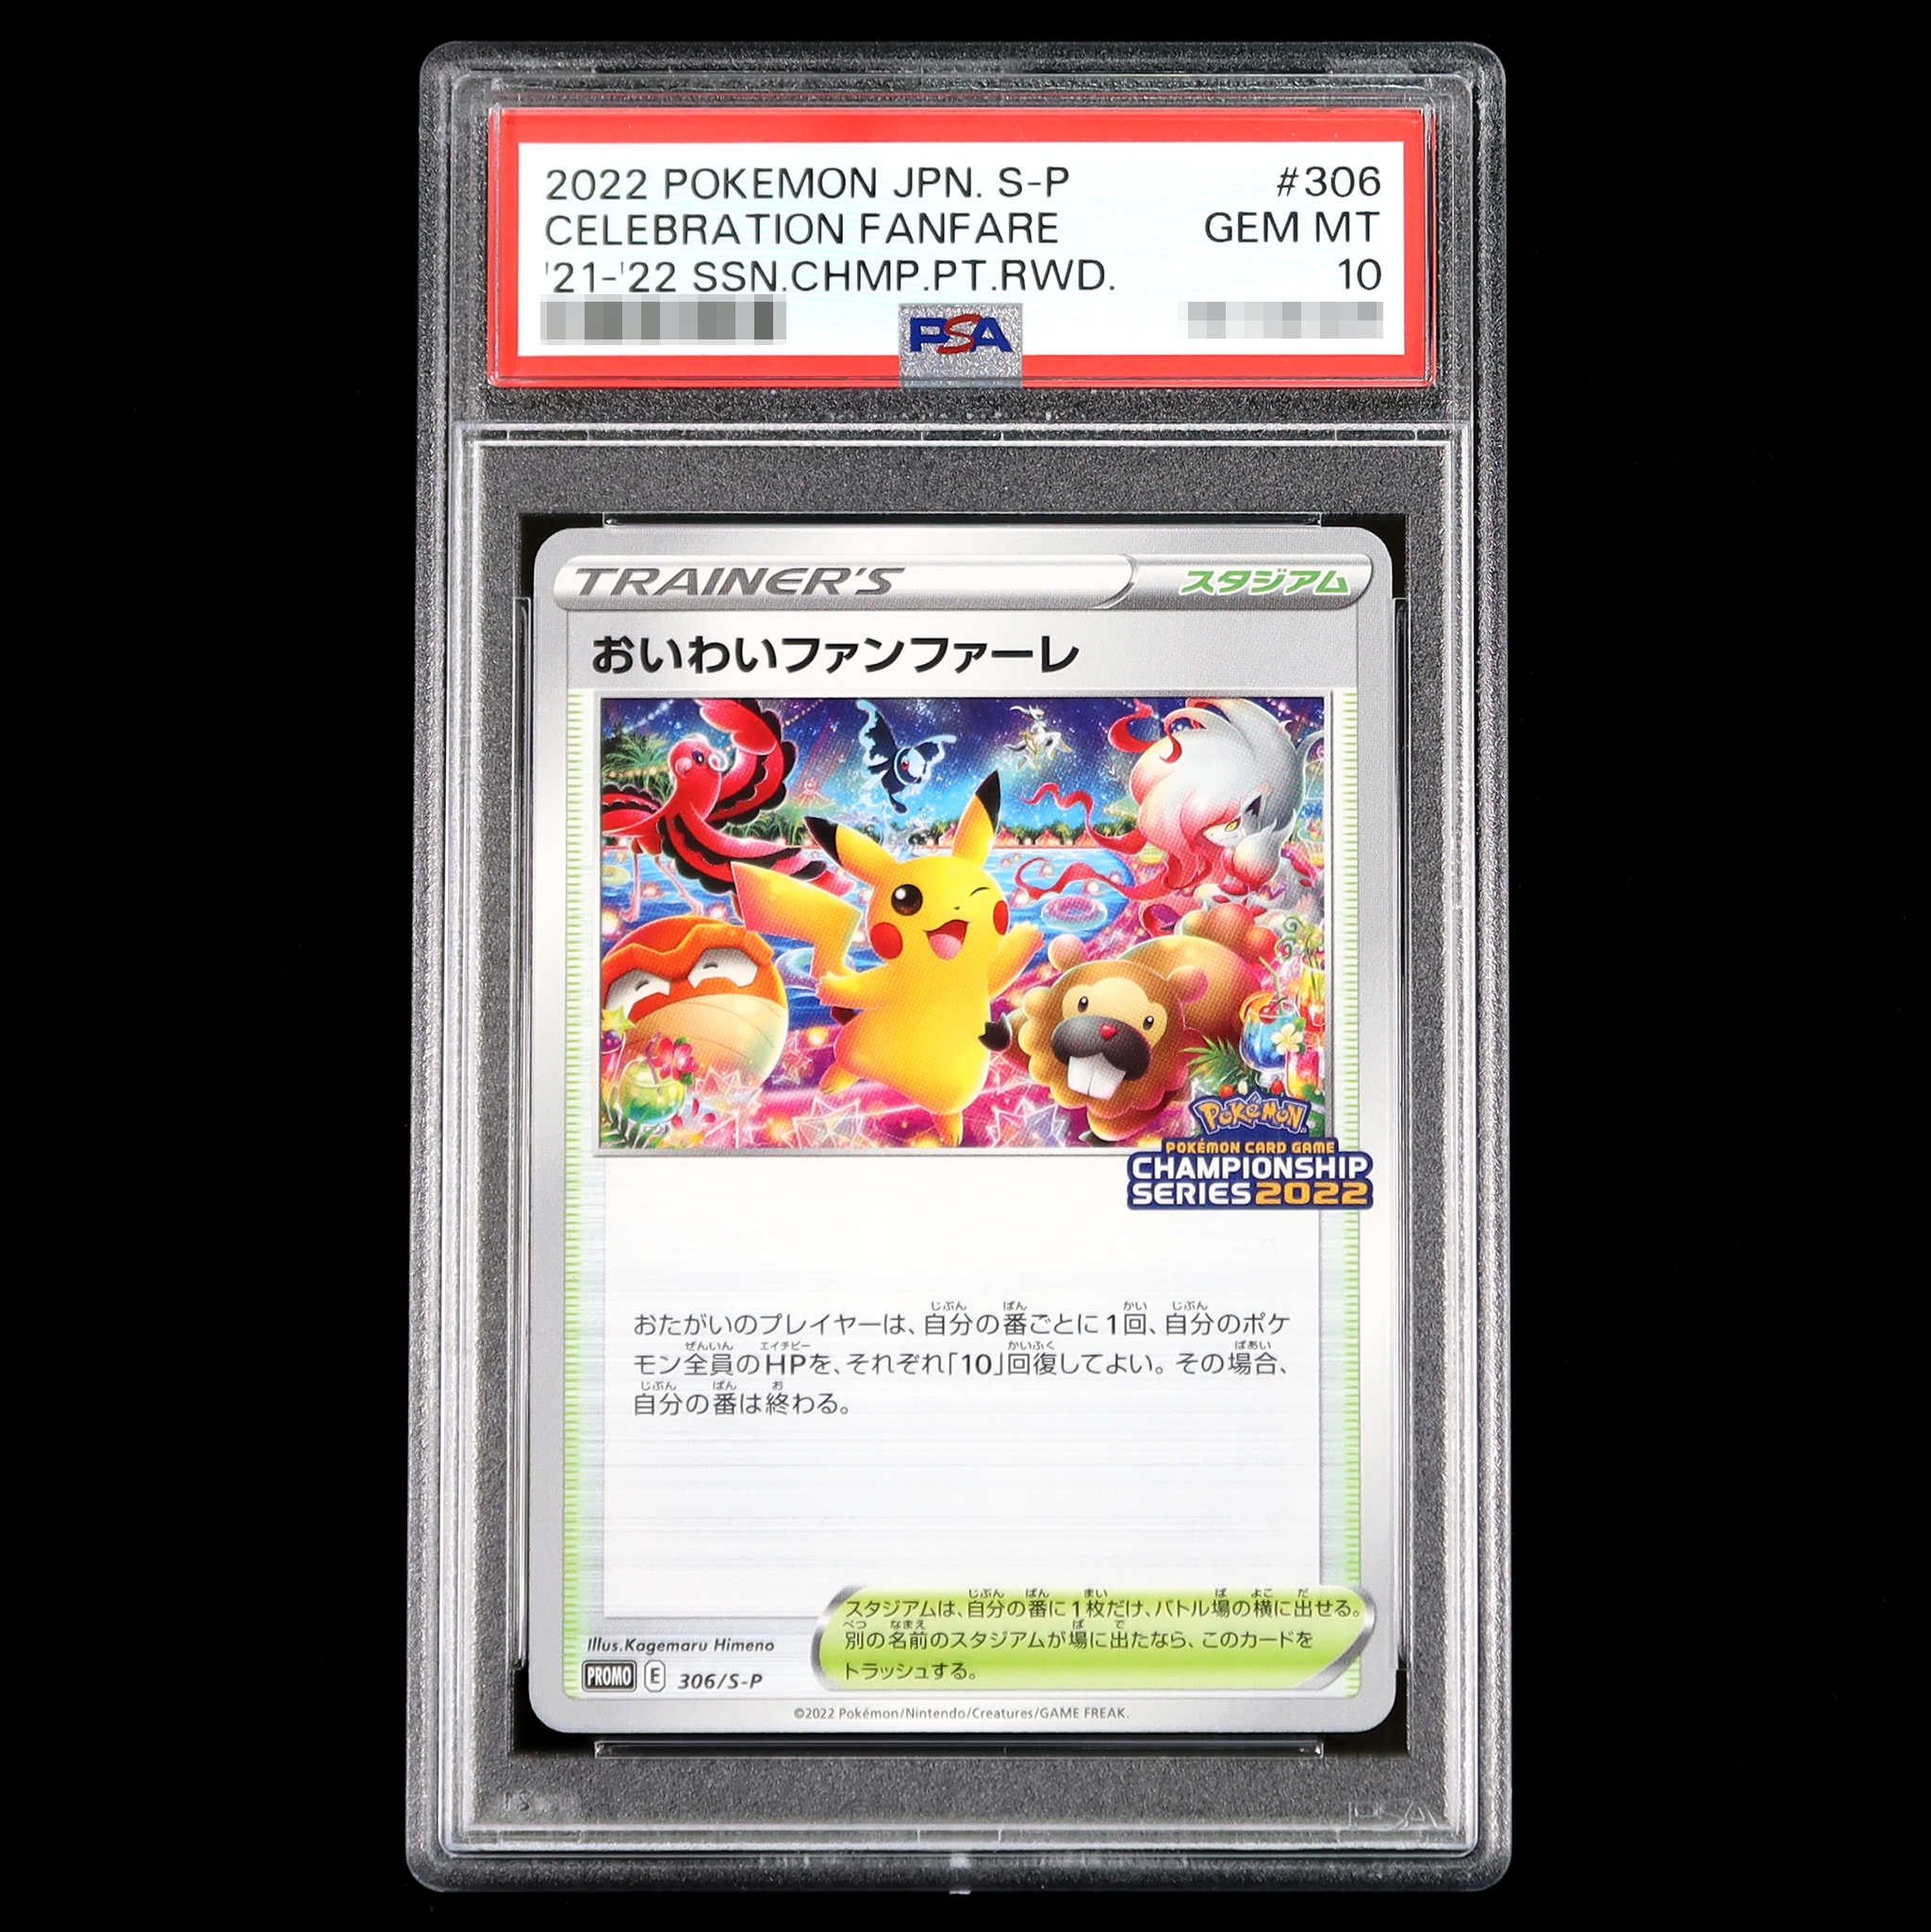 [Pokemon Card Game/[S11] Lost Abyss]Aerodactyl V 106/100 SR Foil